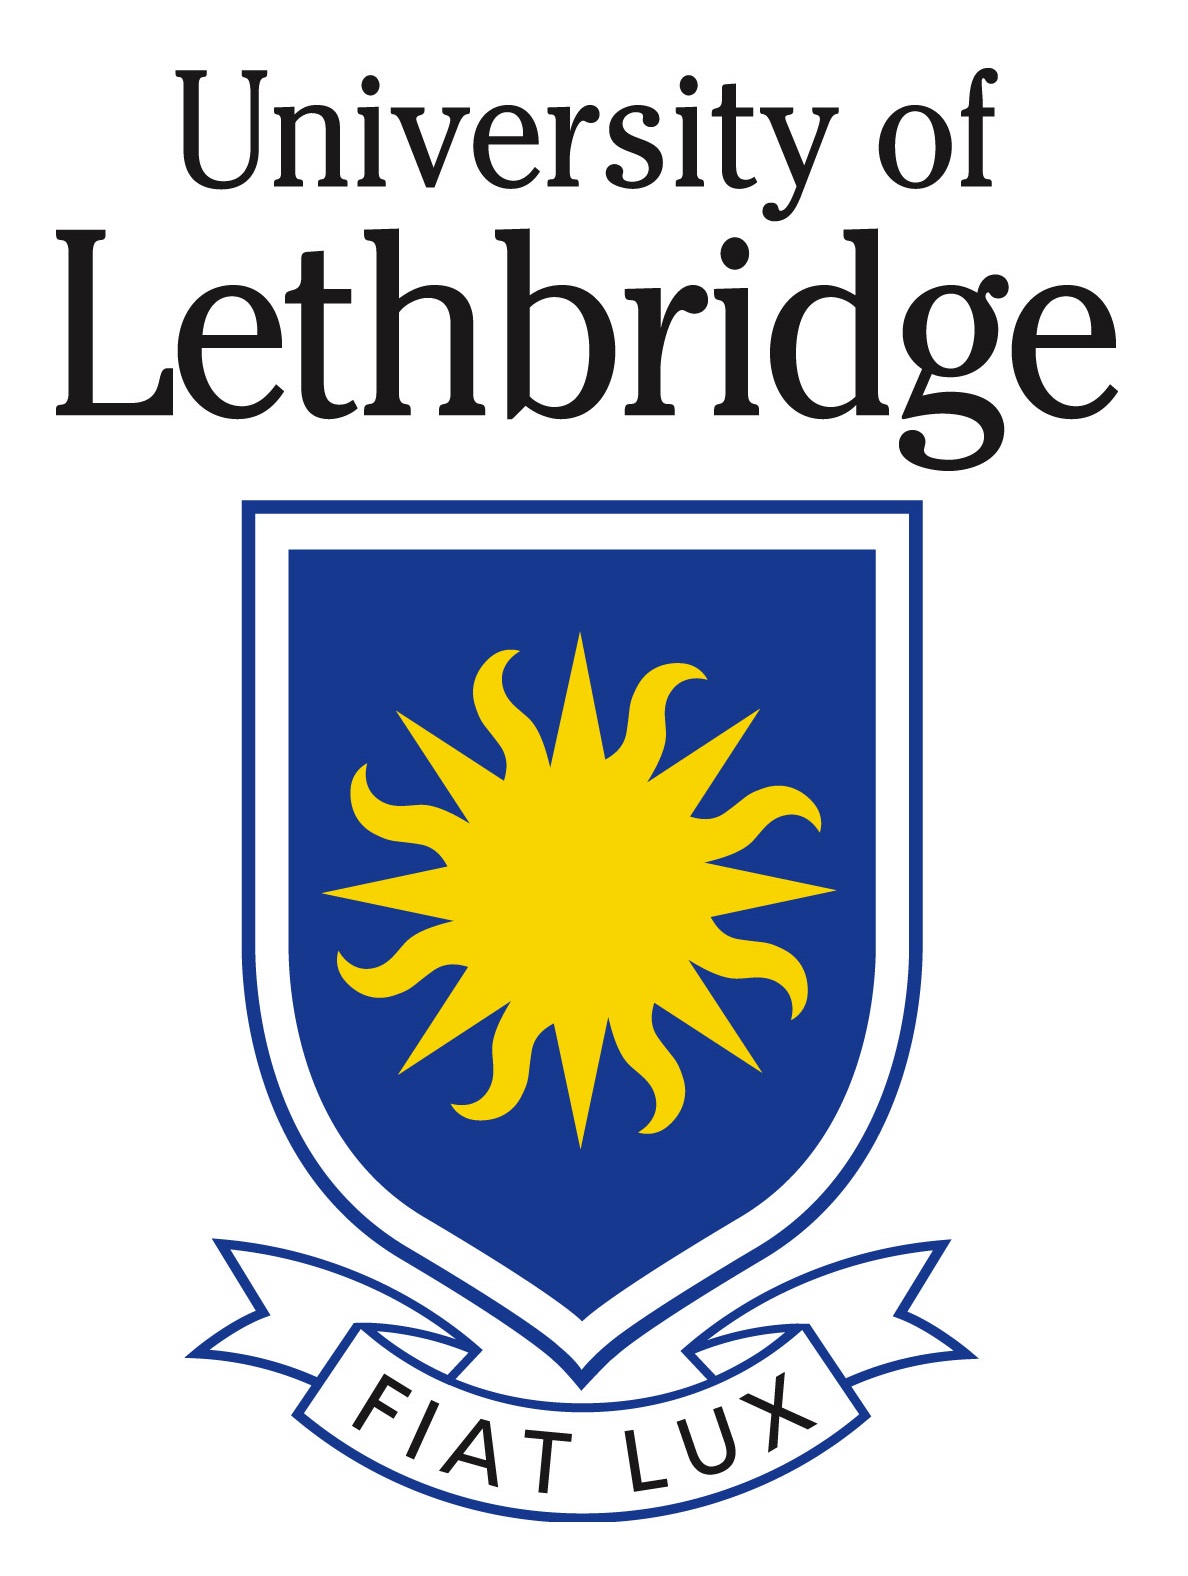 University of Lethbridge - Calgary